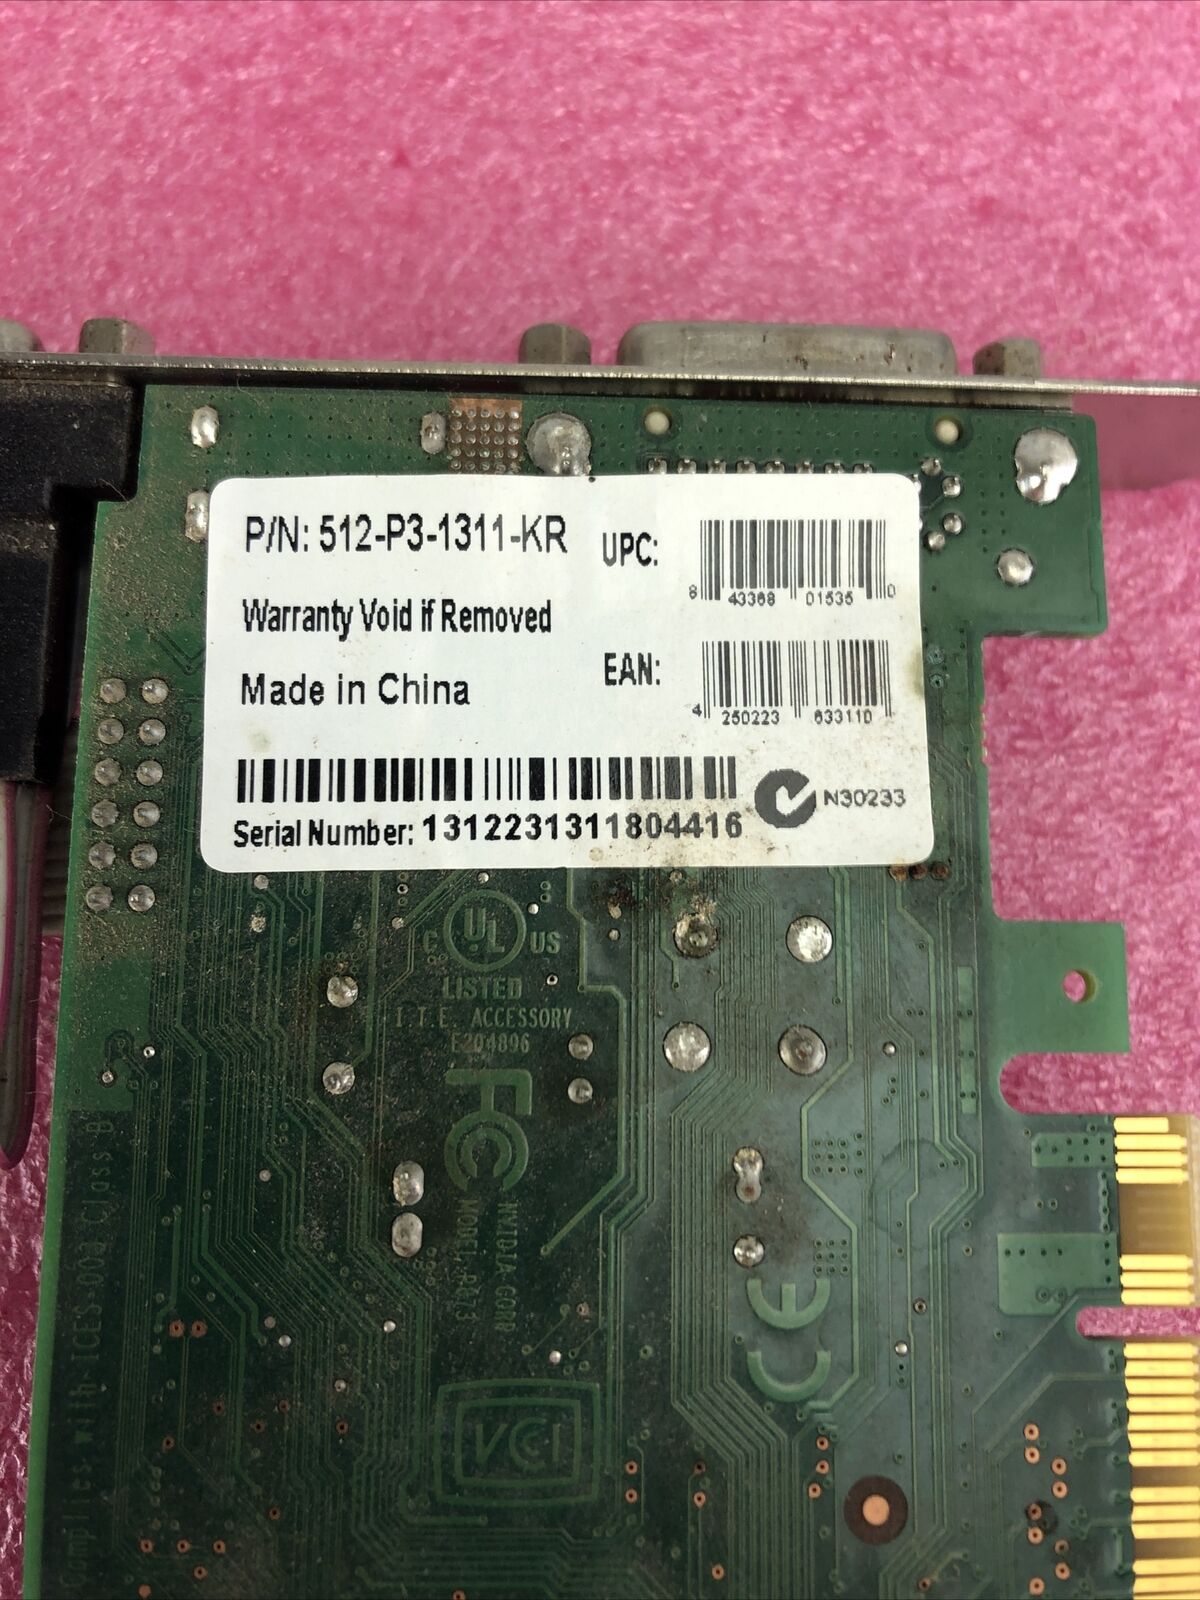 EVGA NVIDIA GEFORCE 210 512MB 512-P3-1311-KR PCIe